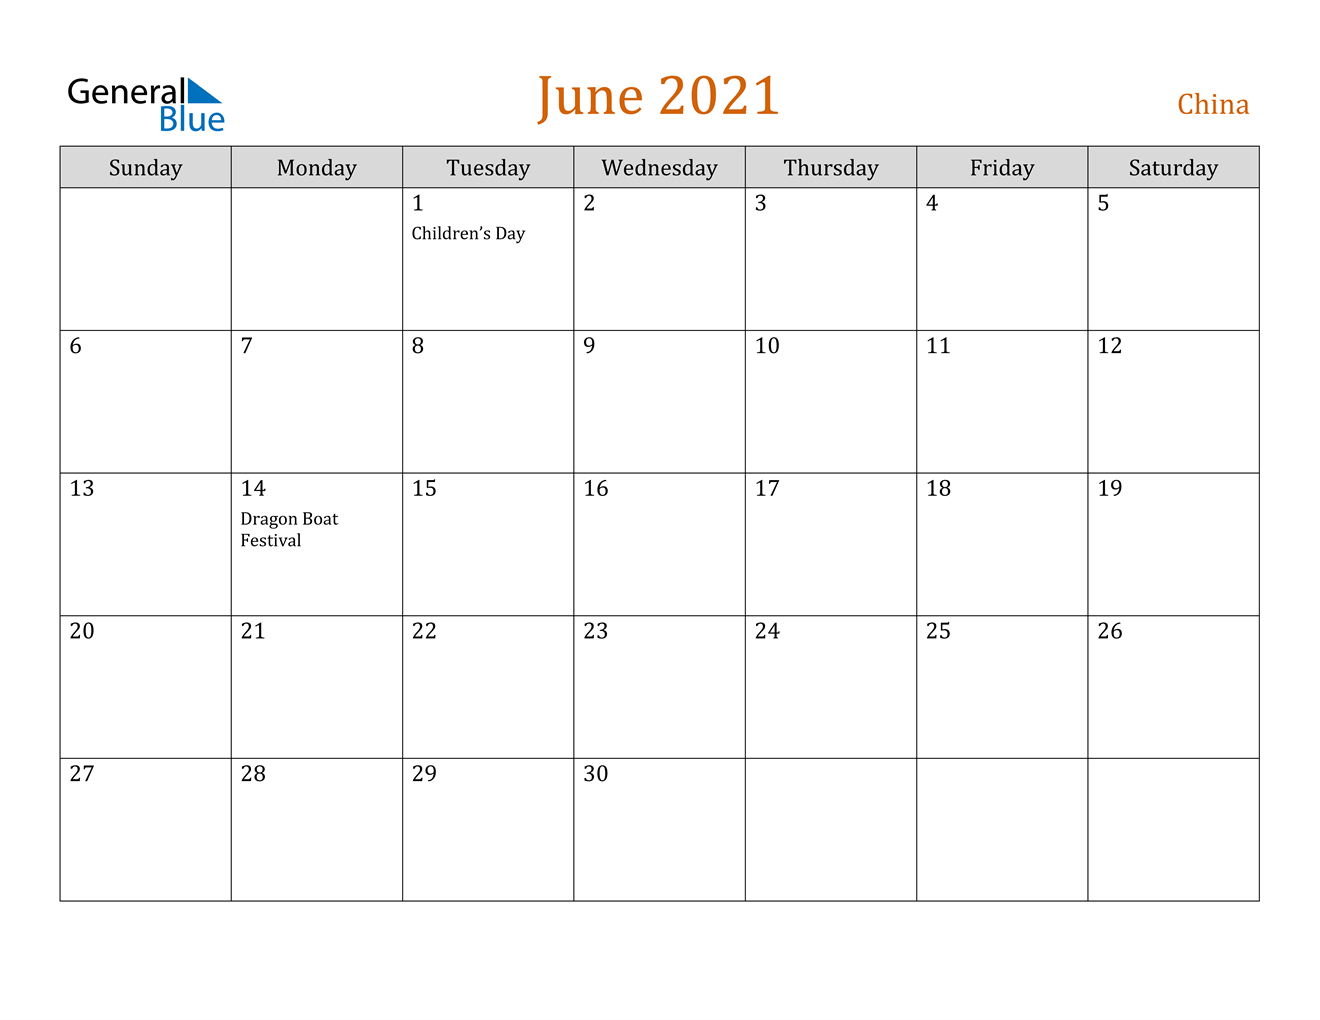 June 2021 Calendar - China